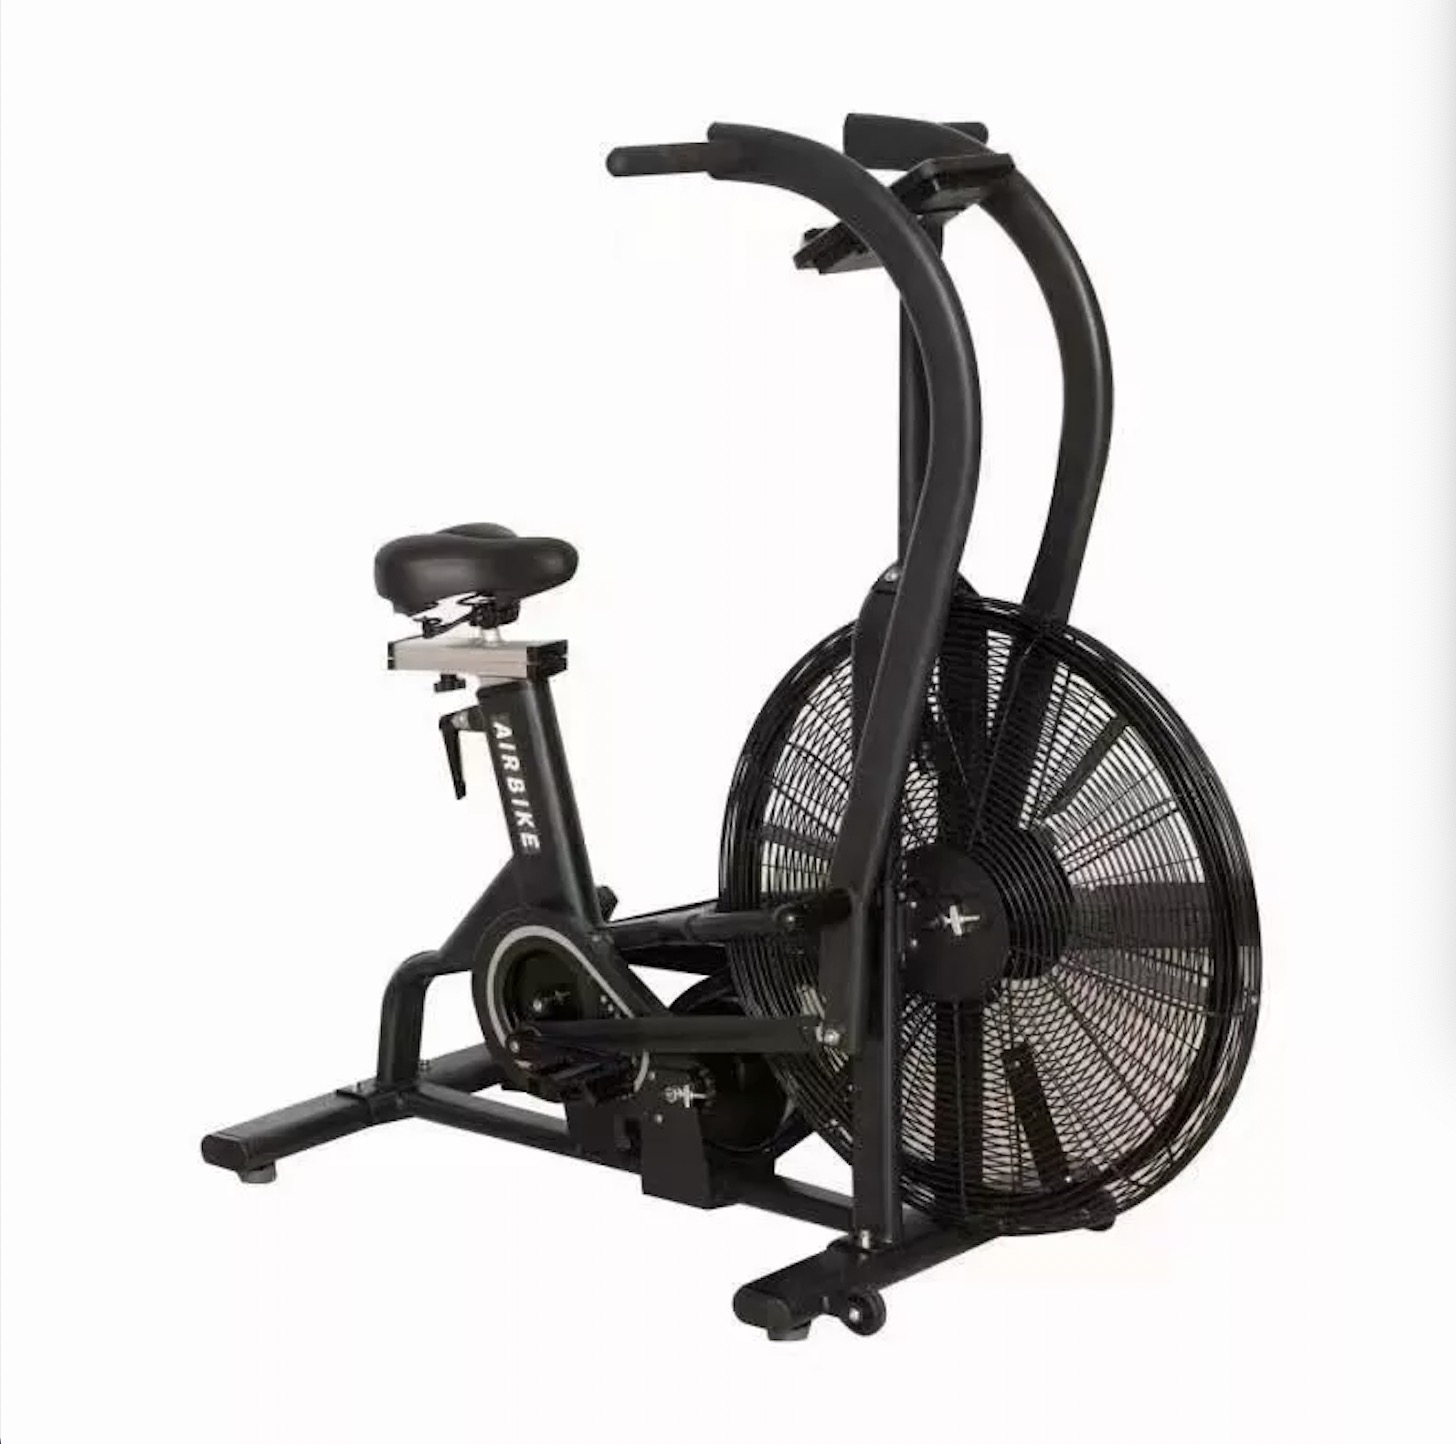 Mpanamboatra matihanina High Quality Gym Equipment Fitness Air Bike